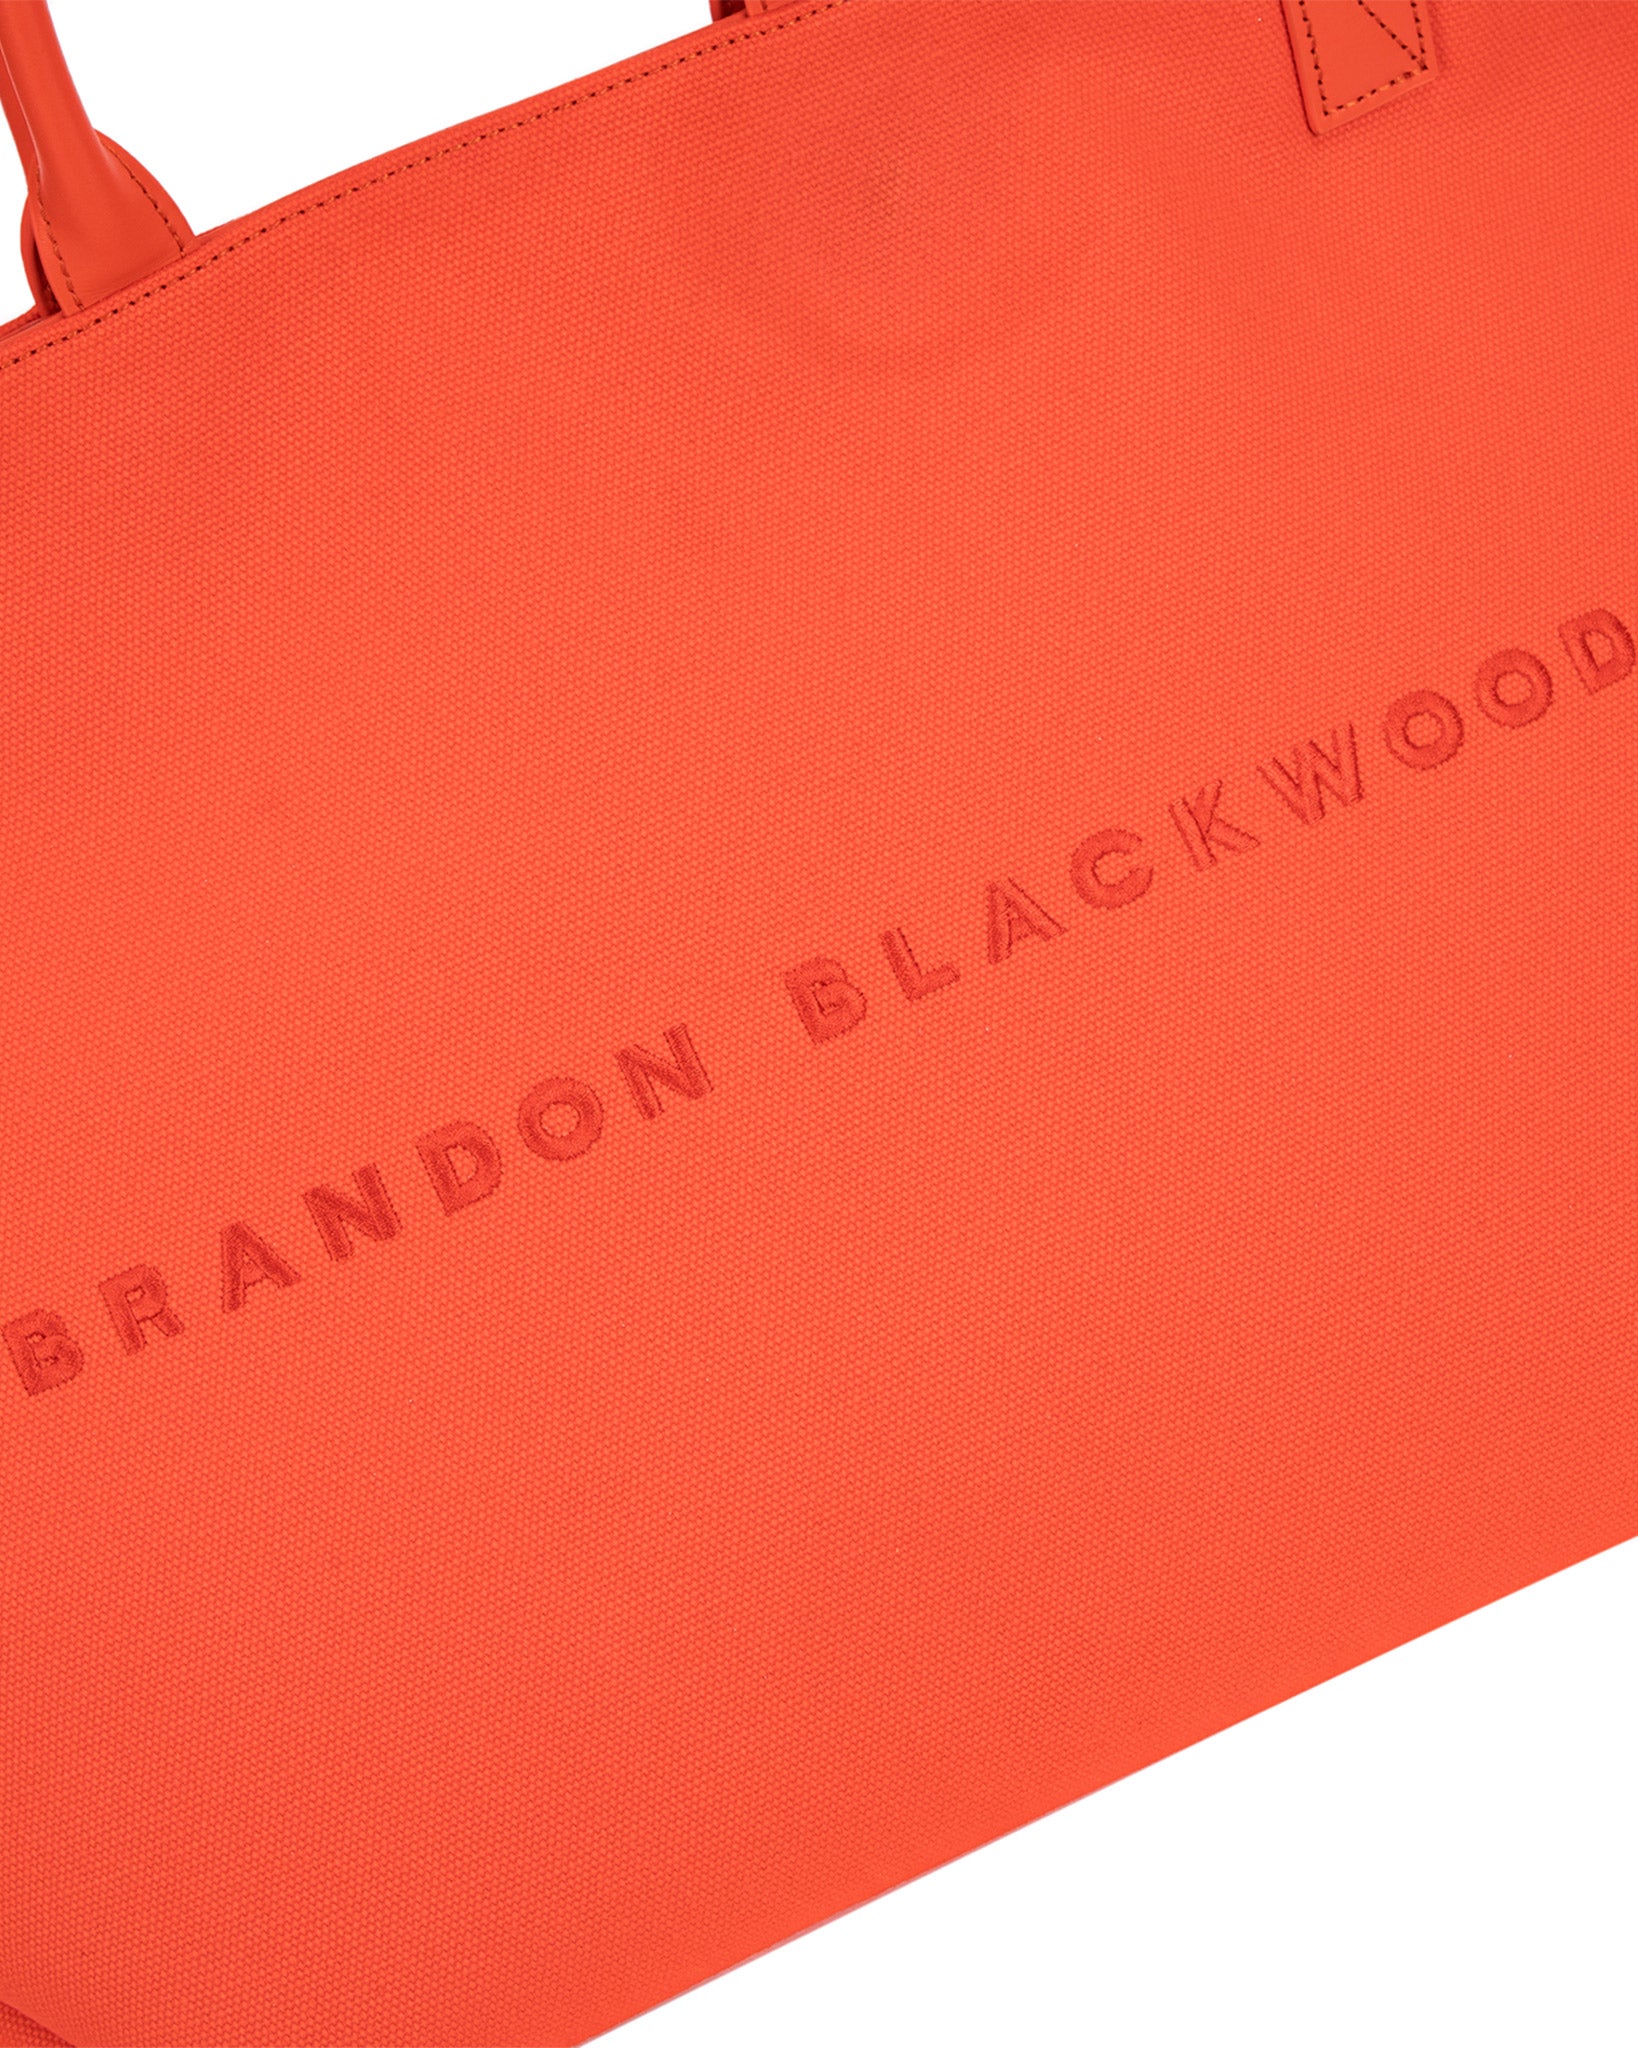 Brandon Blackwood New York - Everyday Tote - Orange Canvas